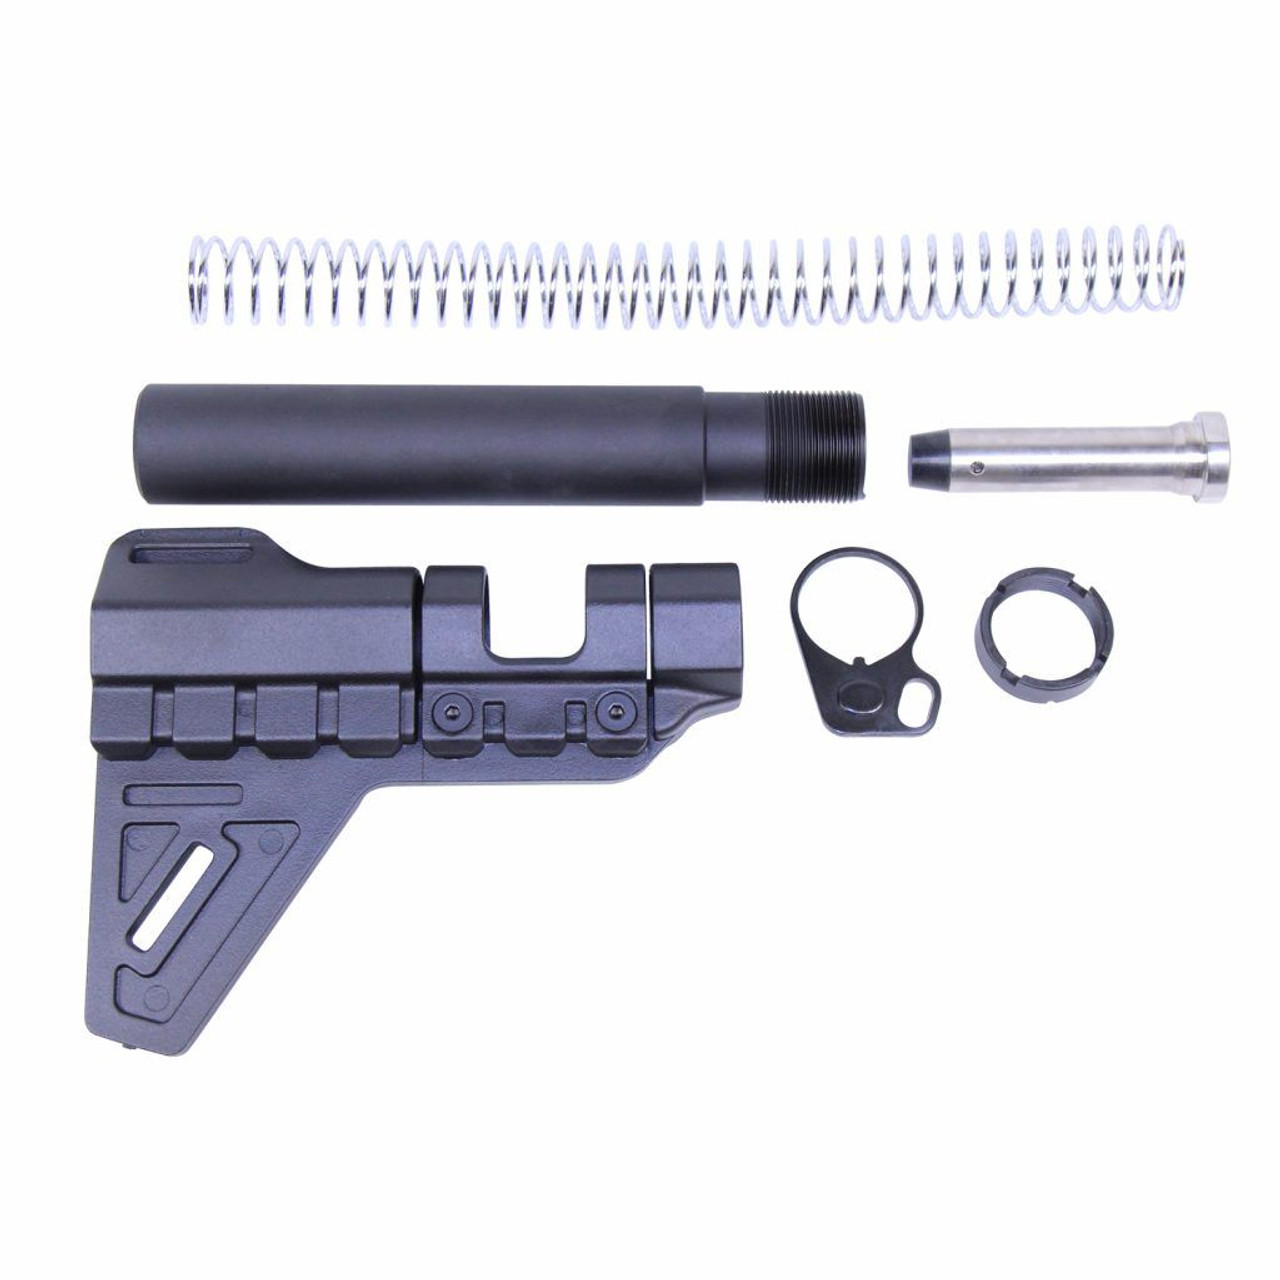 Guntec USA Micro Breach Pistol Brace Kit